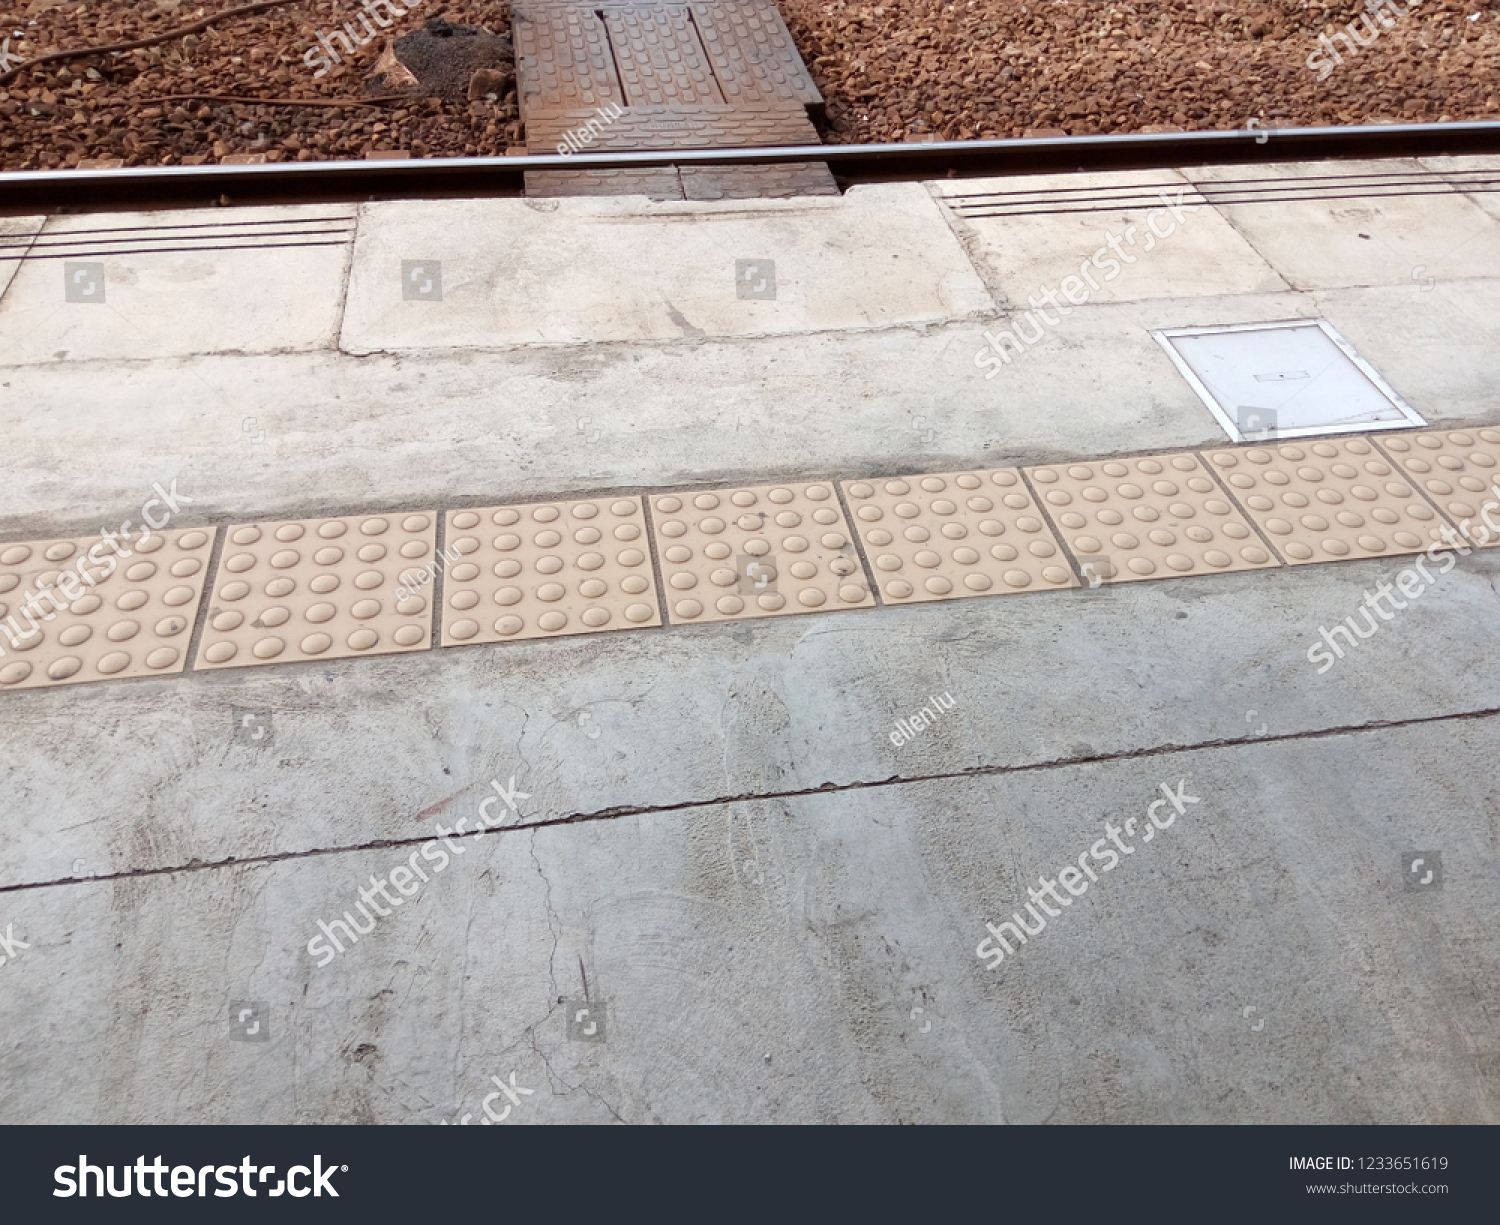  train station's platform edge. #1233651619